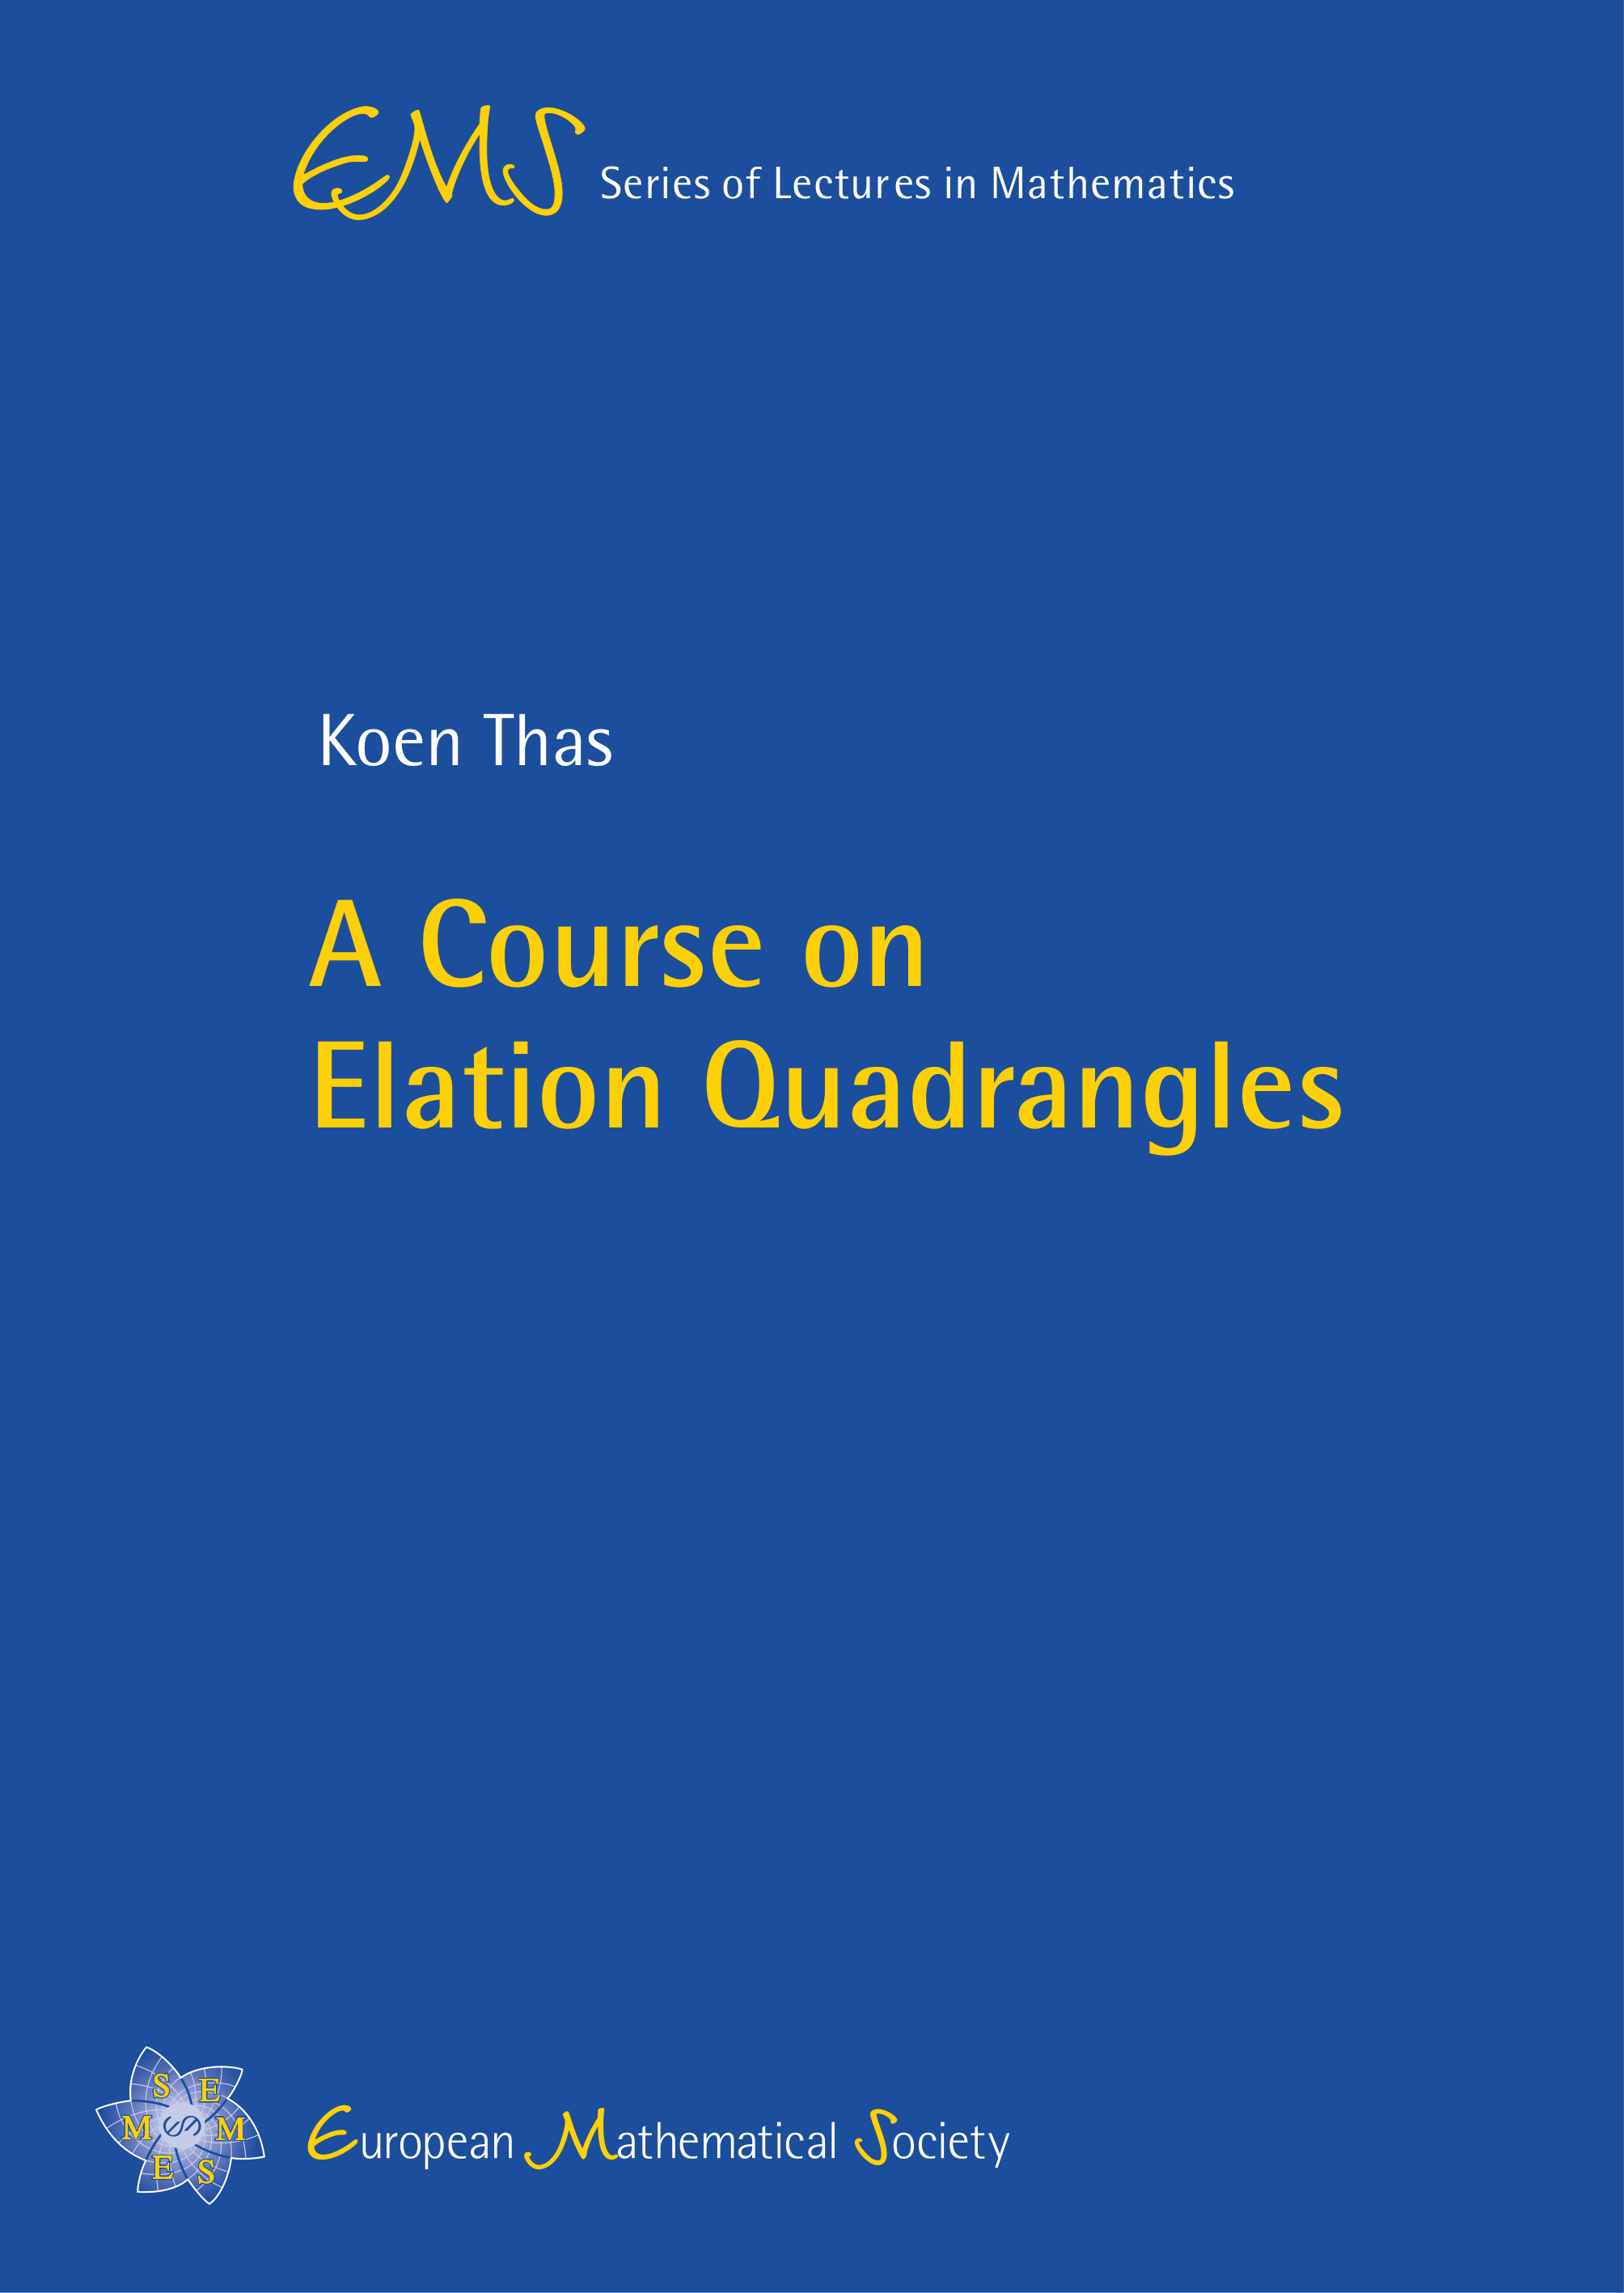 Elation quadrangles with nonisomorphic elation groups cover